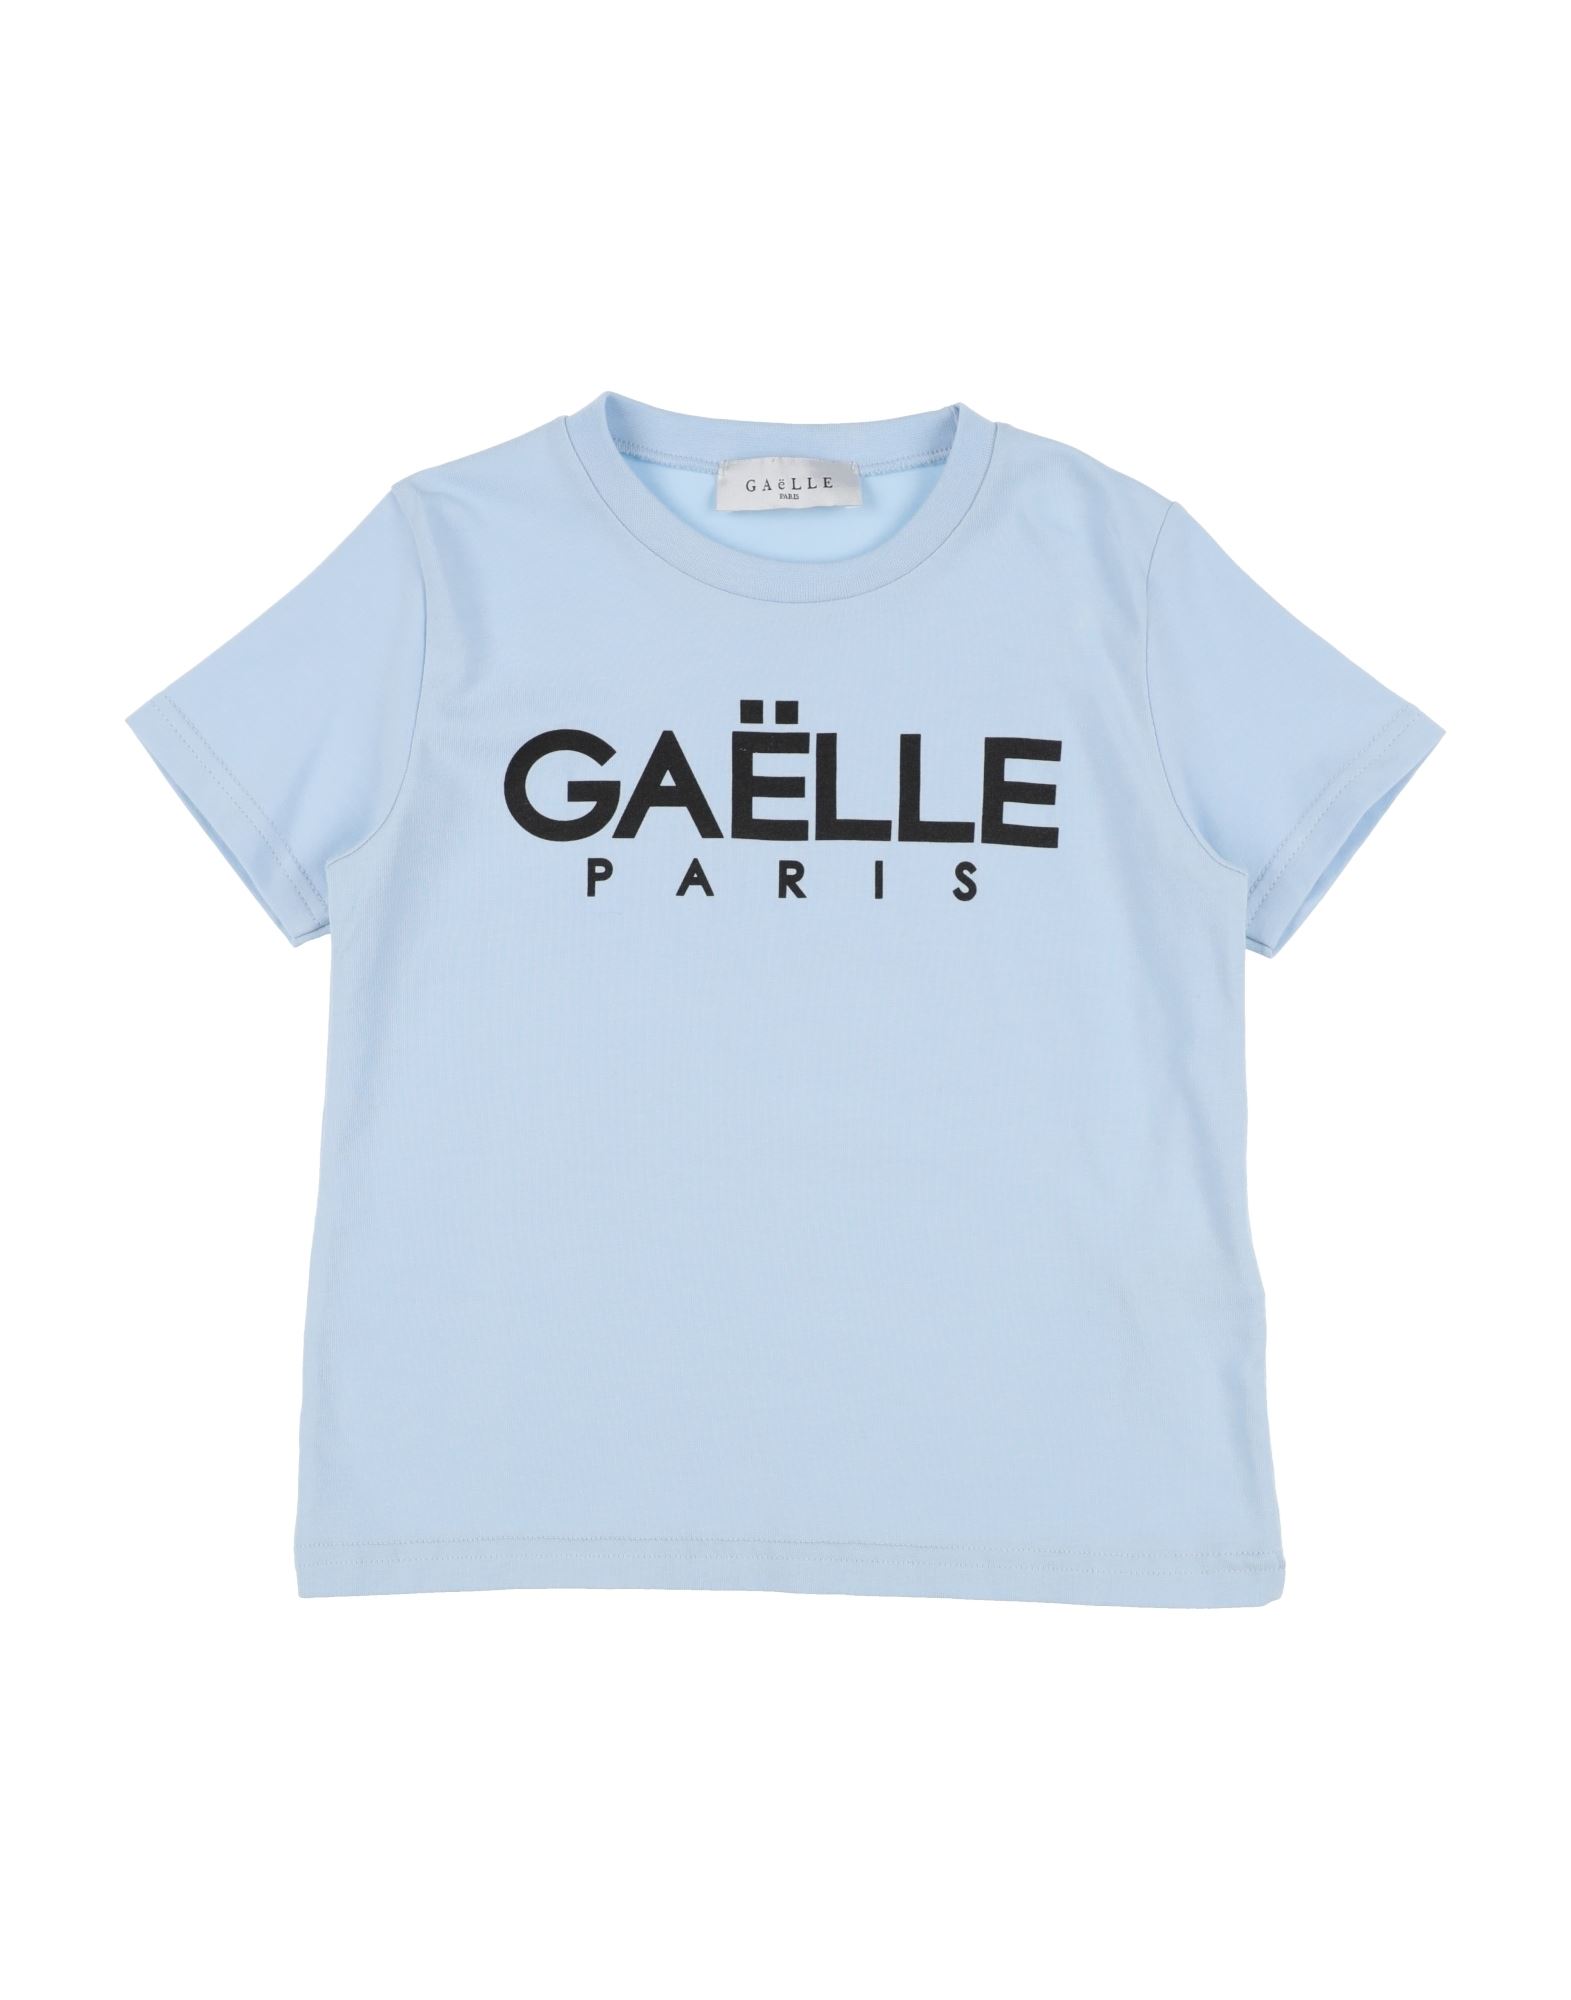 GAëLLE Paris T-shirts Kinder Himmelblau von GAëLLE Paris